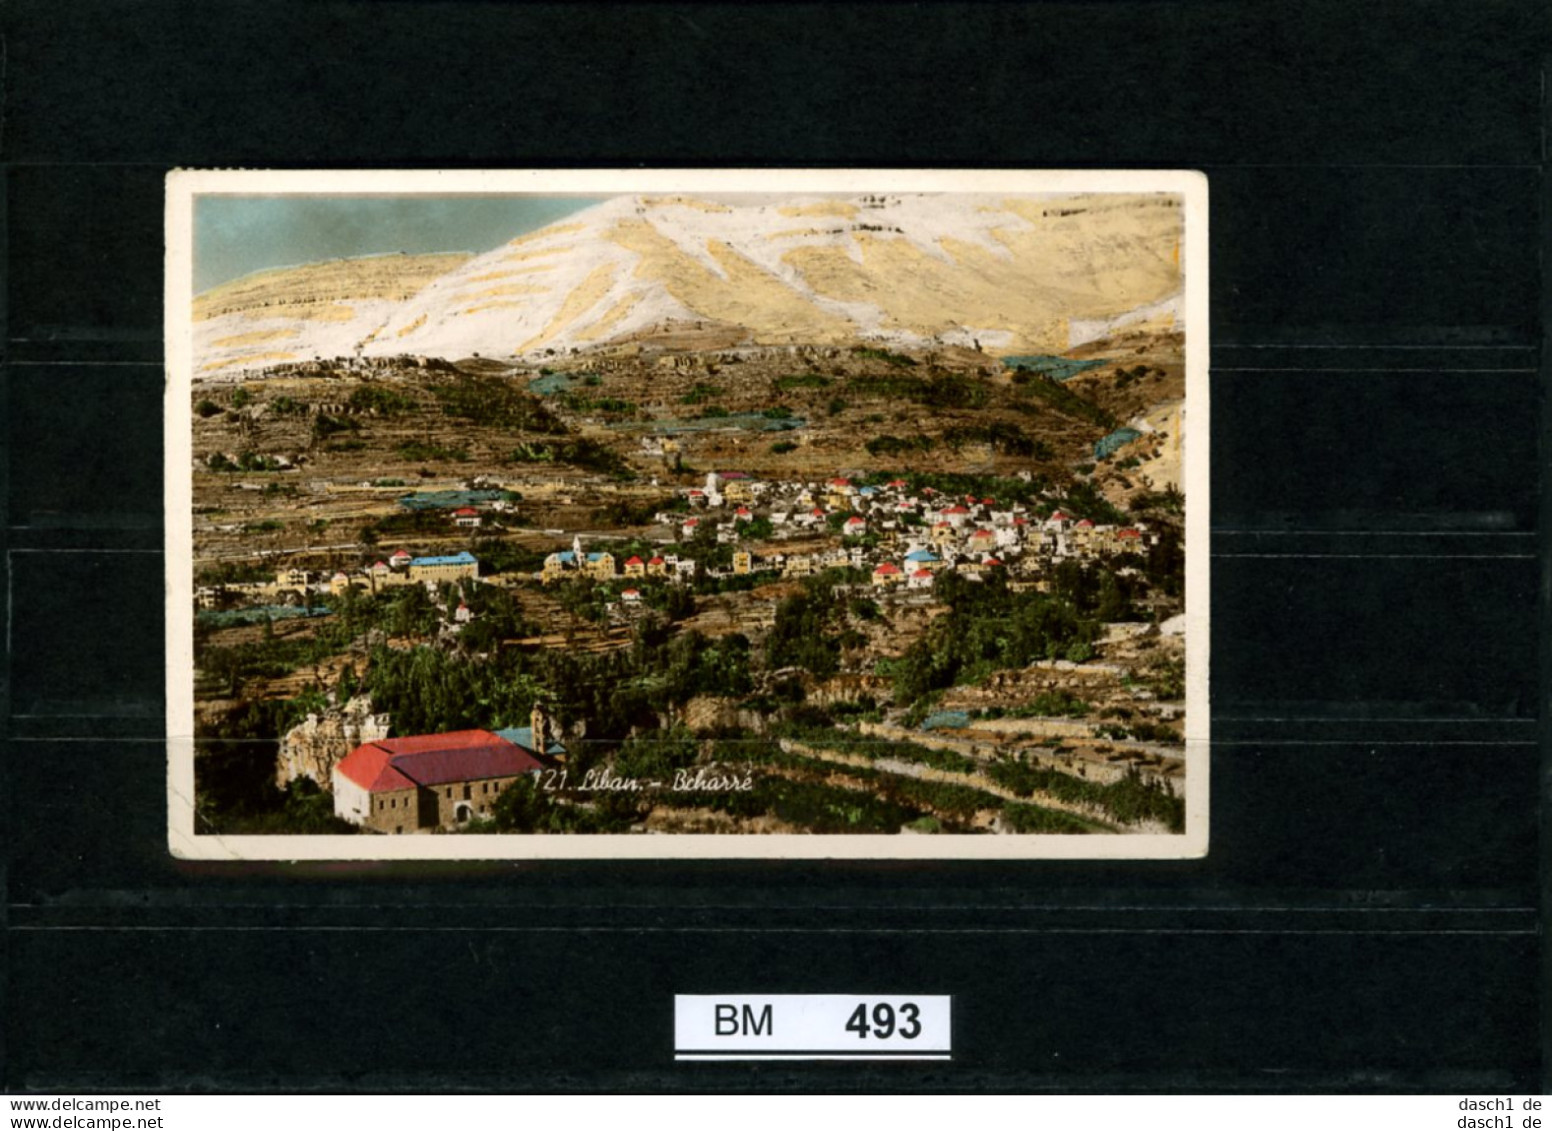 Libanon, AK Gelaufen 1955 - Bcharré - Libano